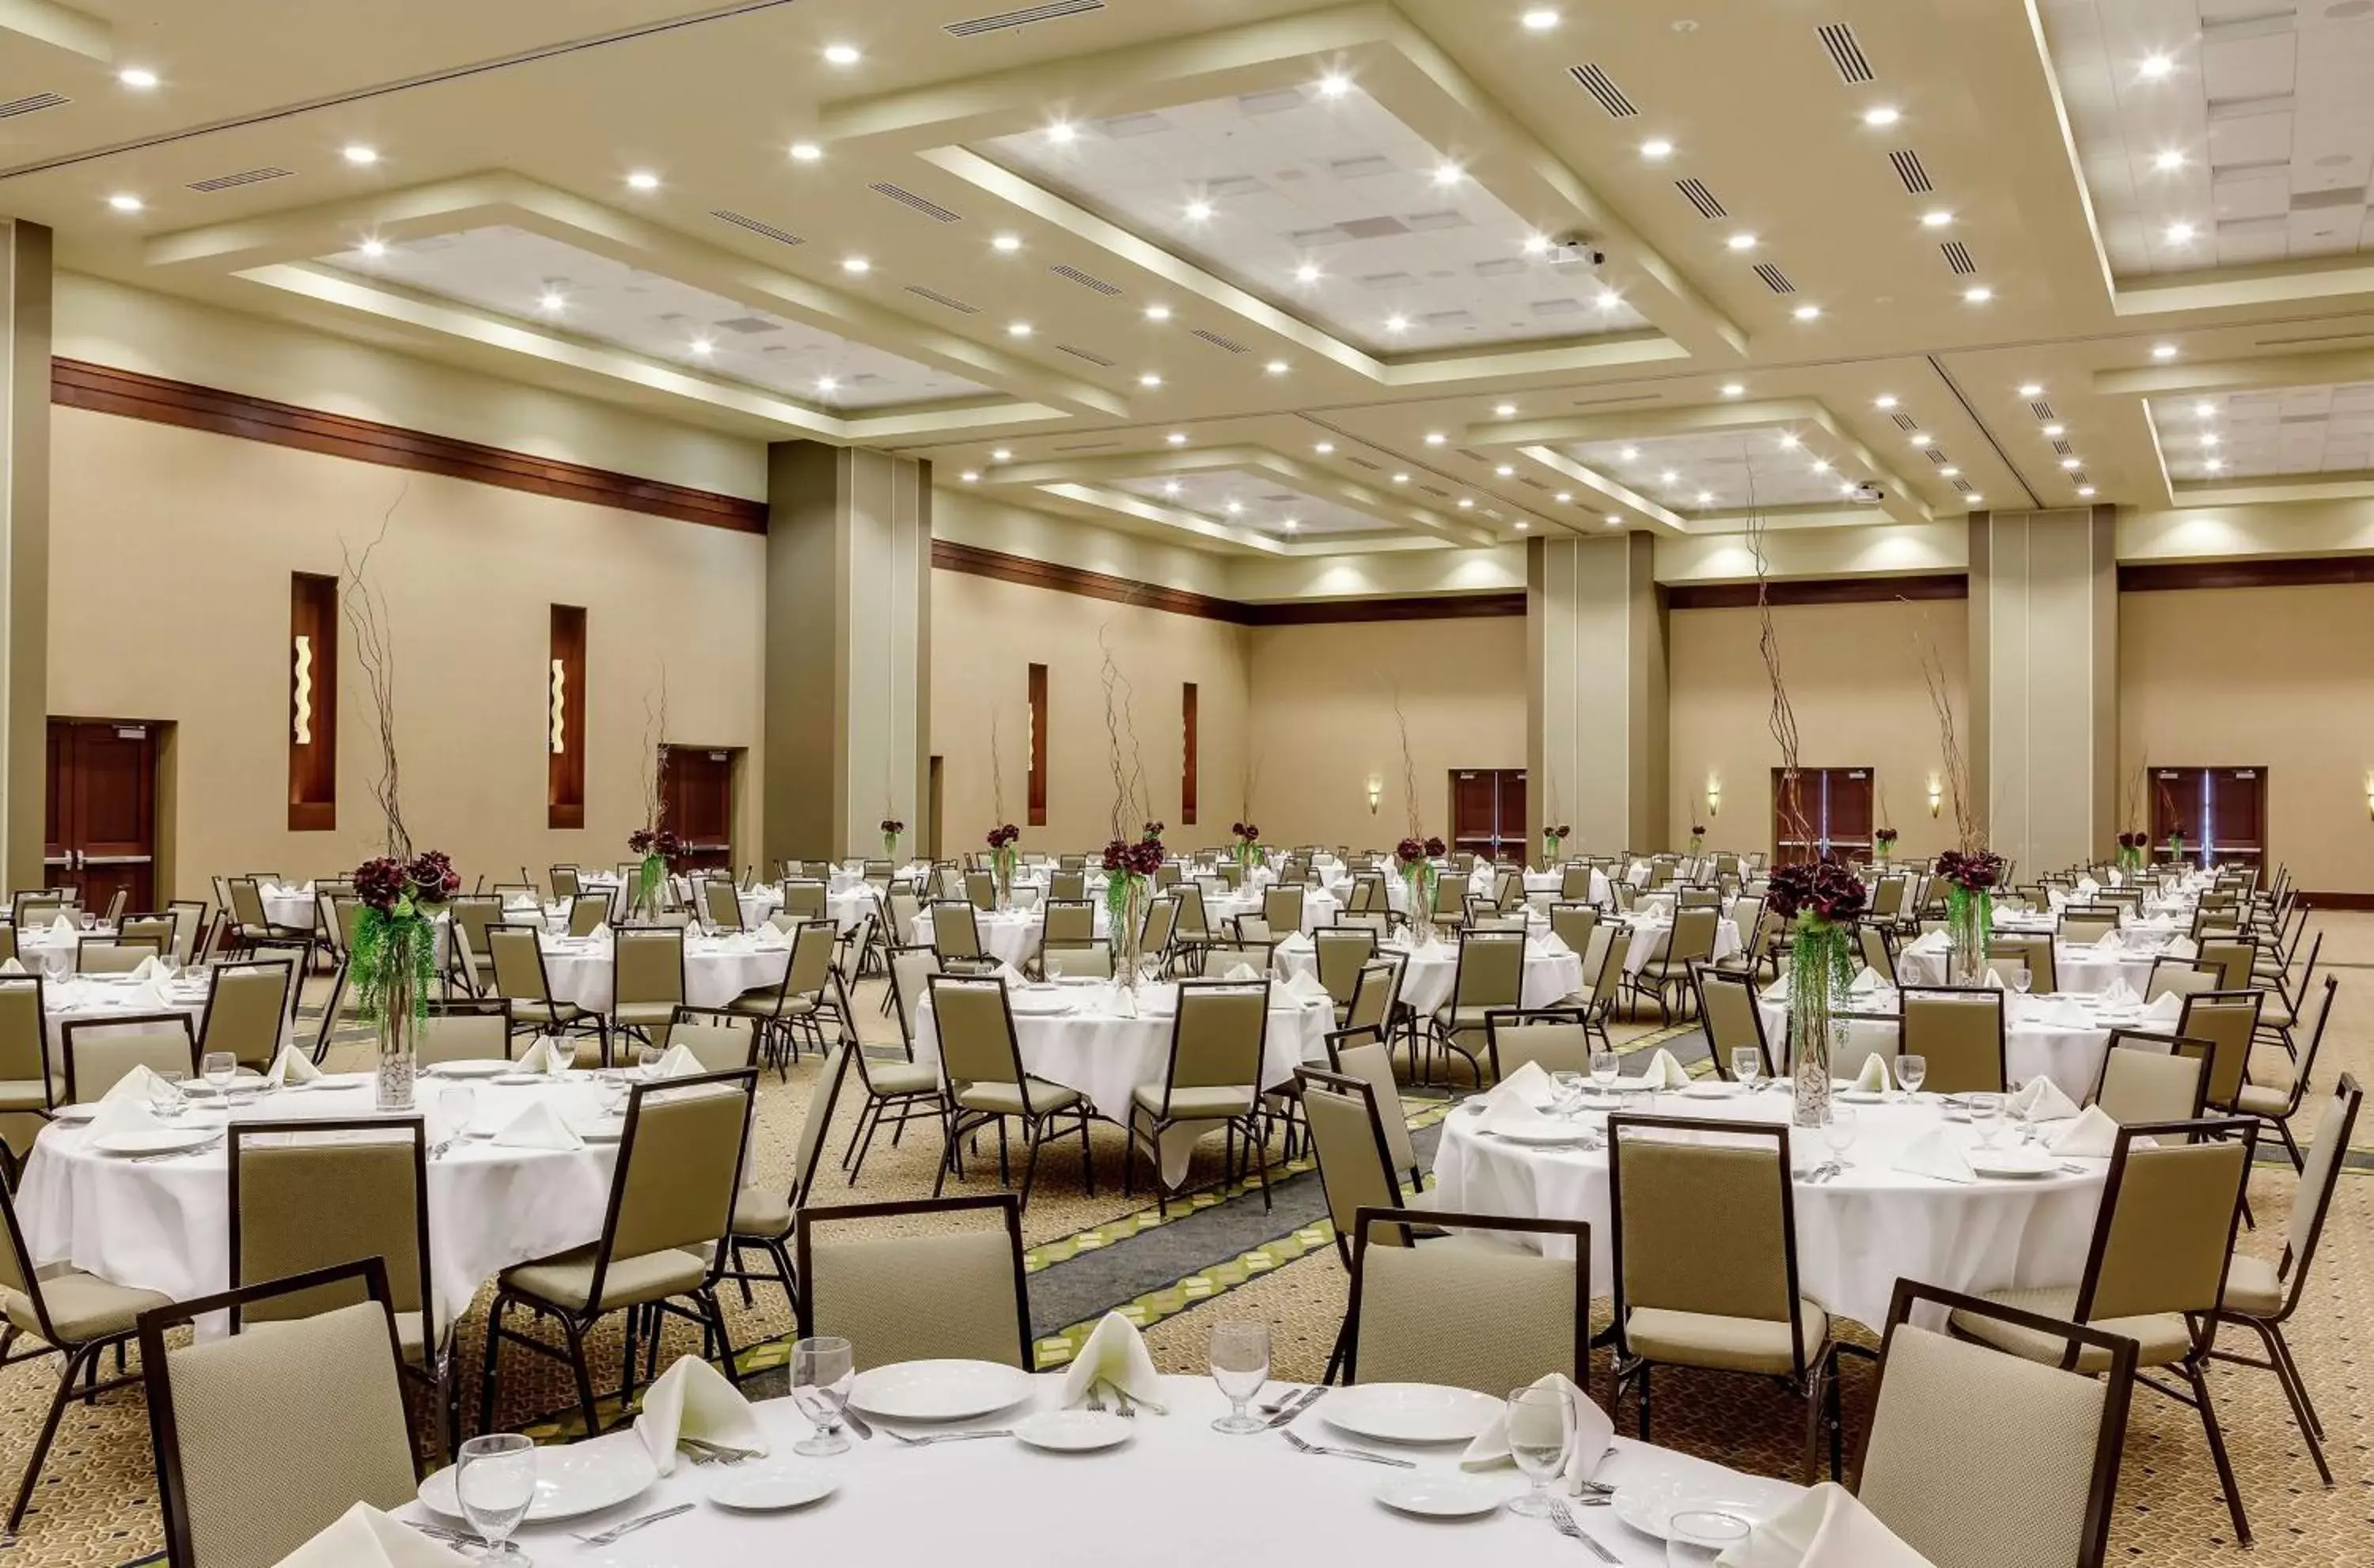 Meeting/conference room, Restaurant/Places to Eat in Hilton Garden Inn Manhattan Kansas